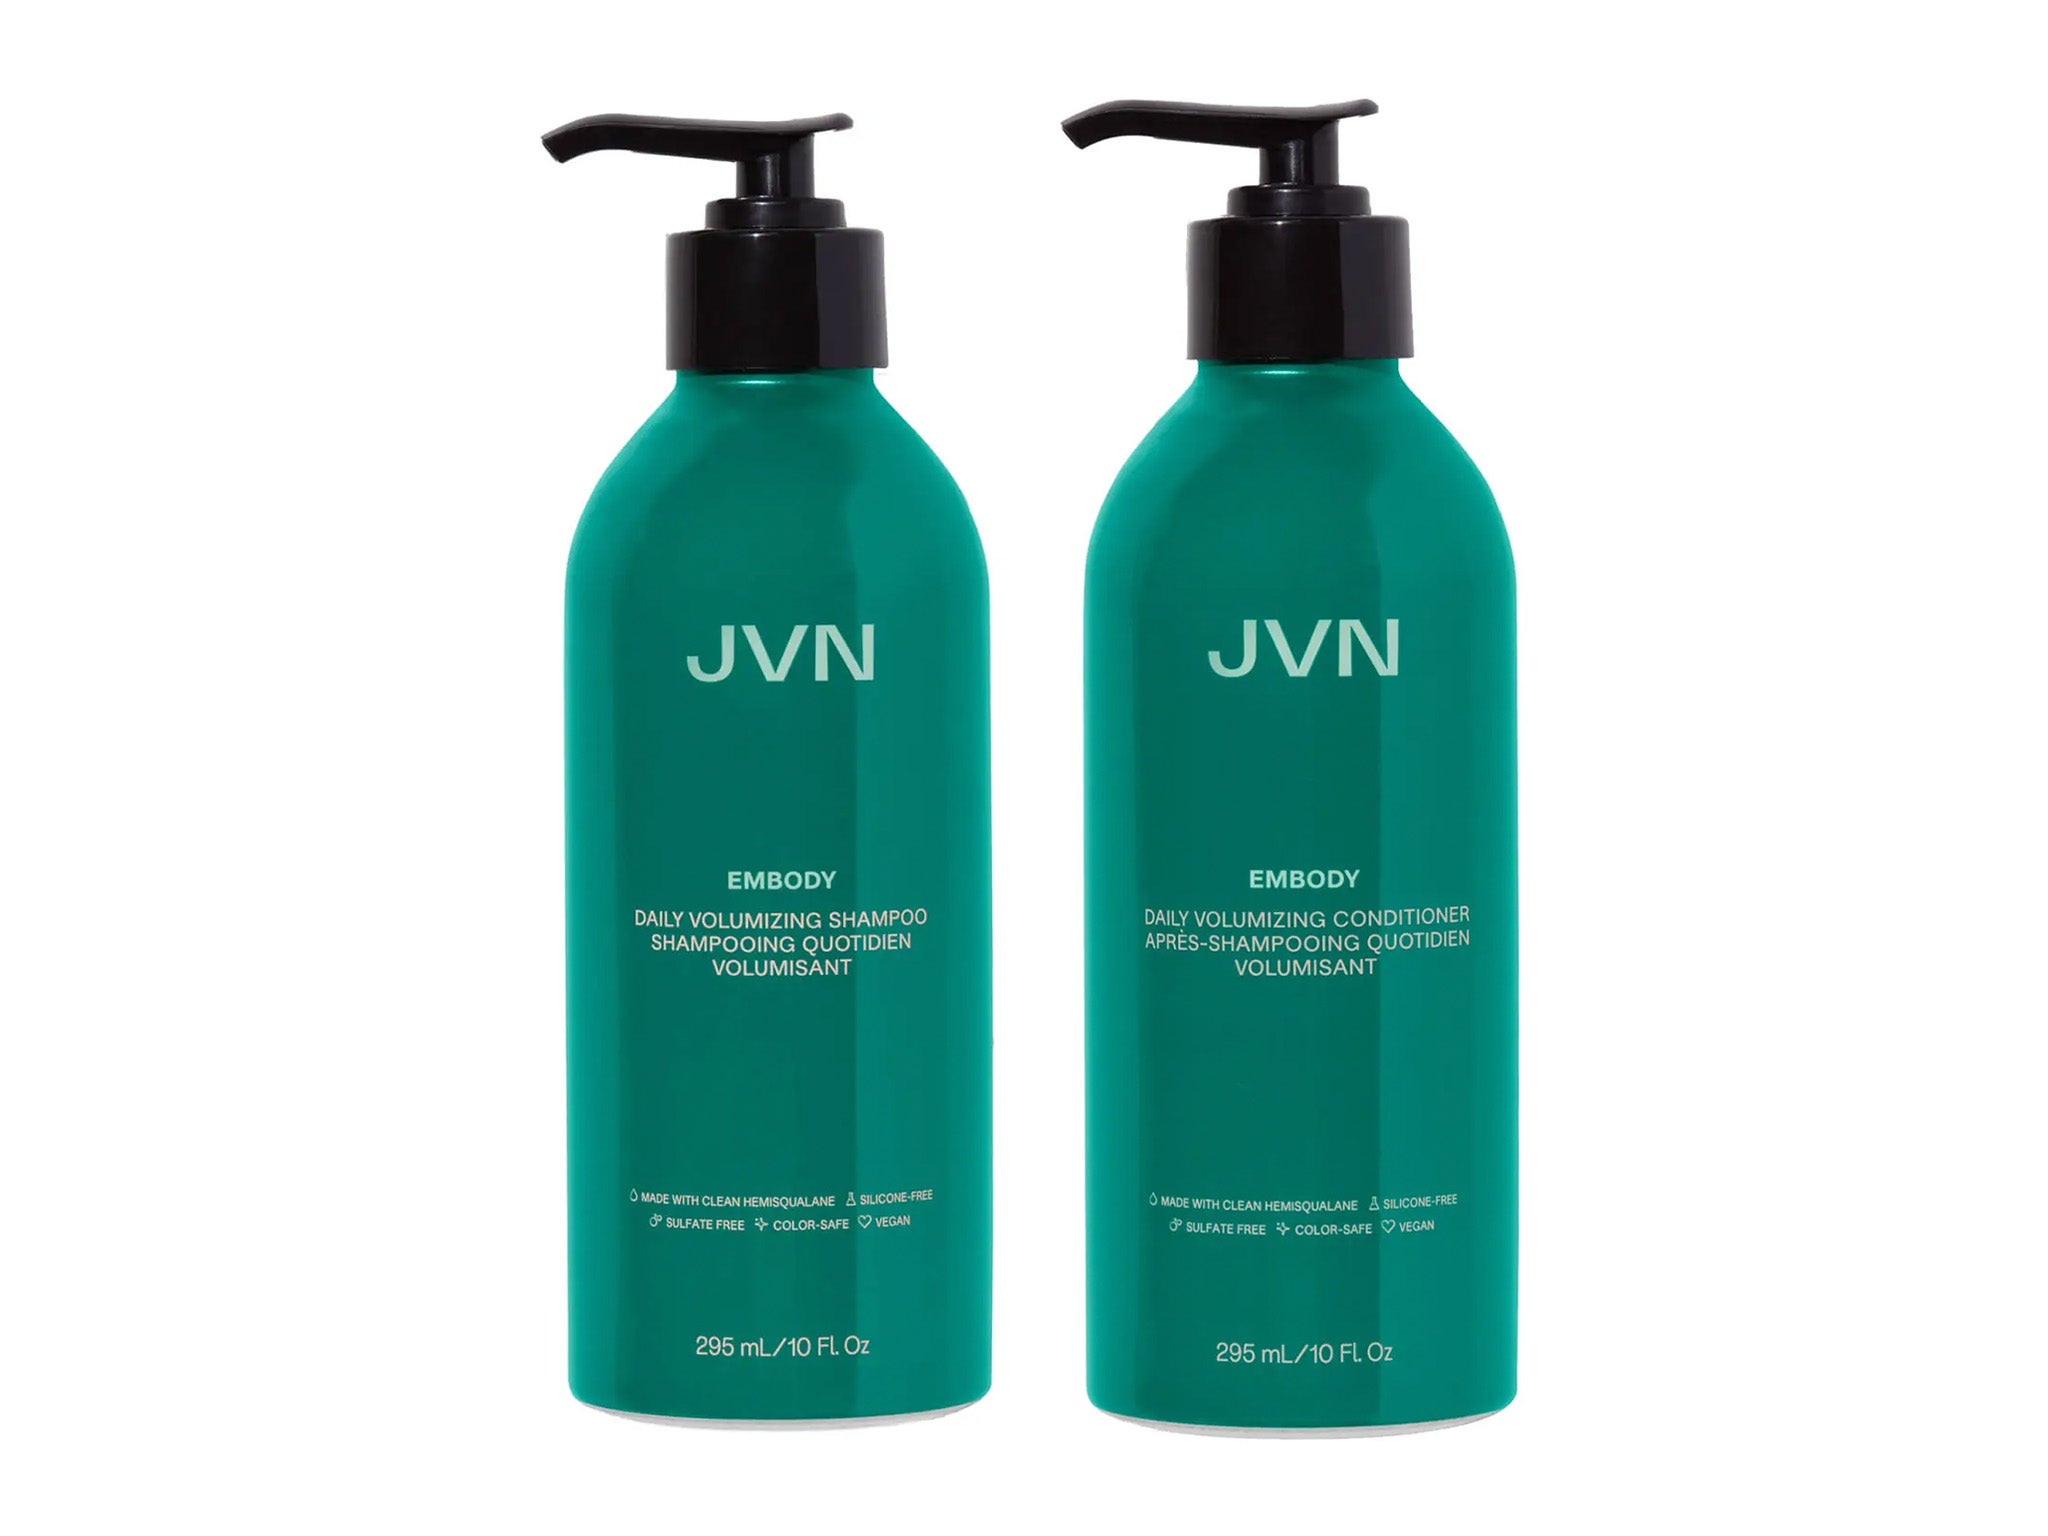 JVN embody daily volumizing shampoo and conditioner